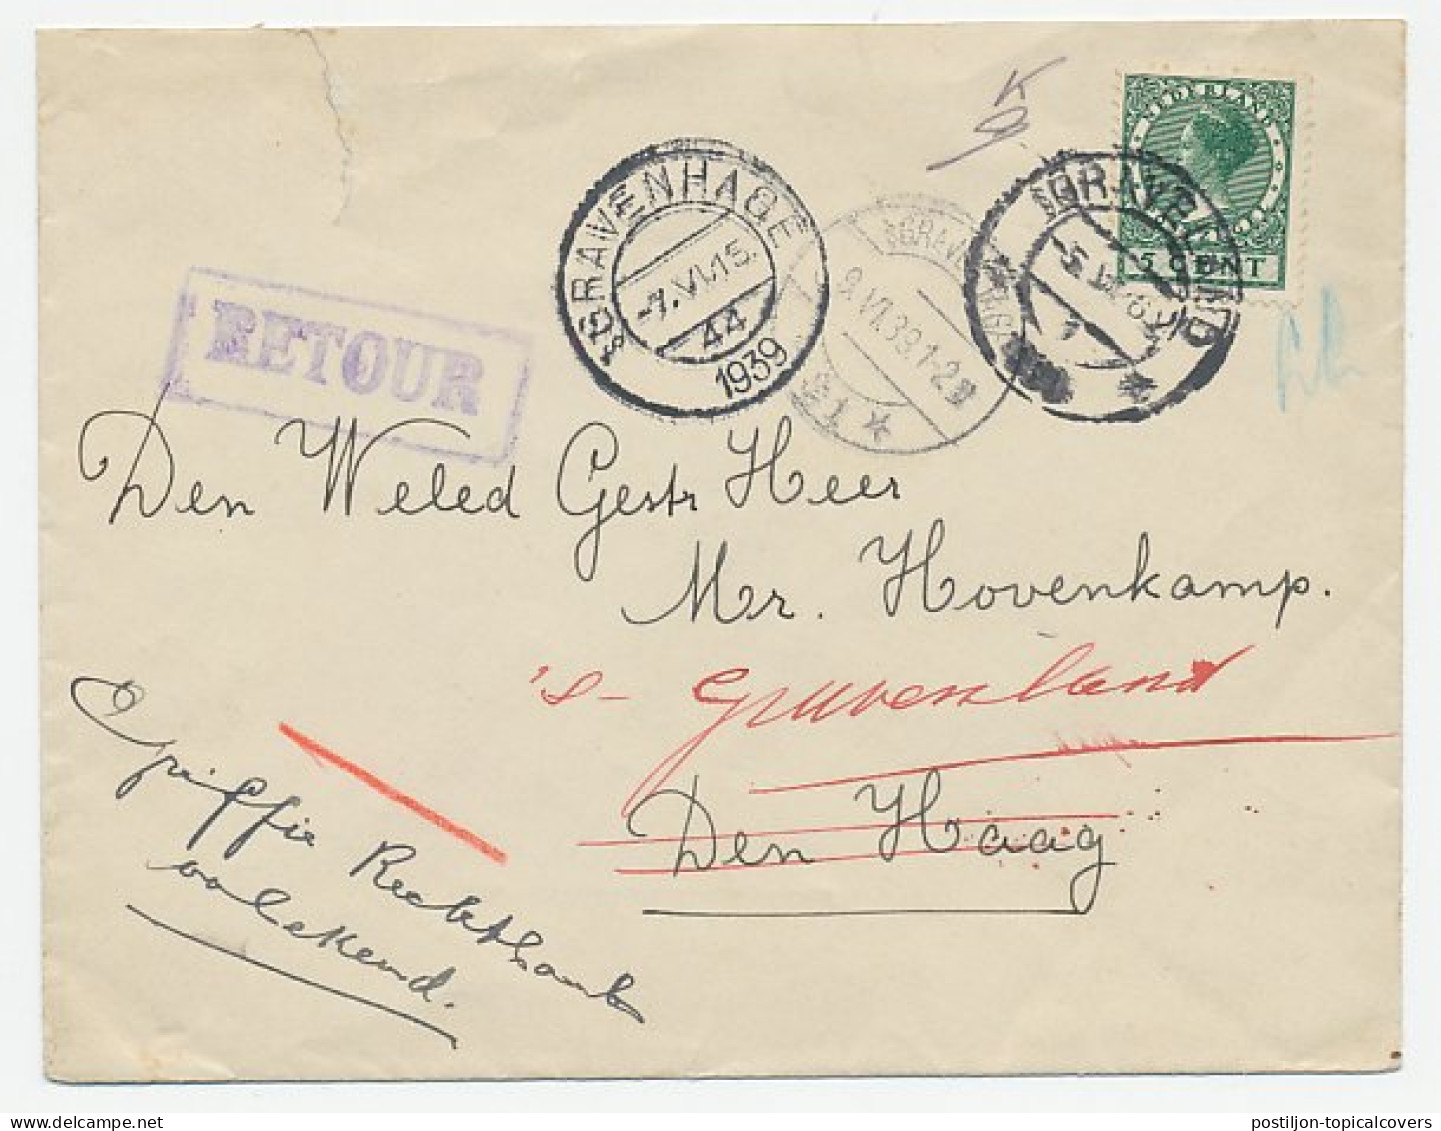 S Graveland - Den Haag 1939 - Onvolledig Adres - Retour - Unclassified